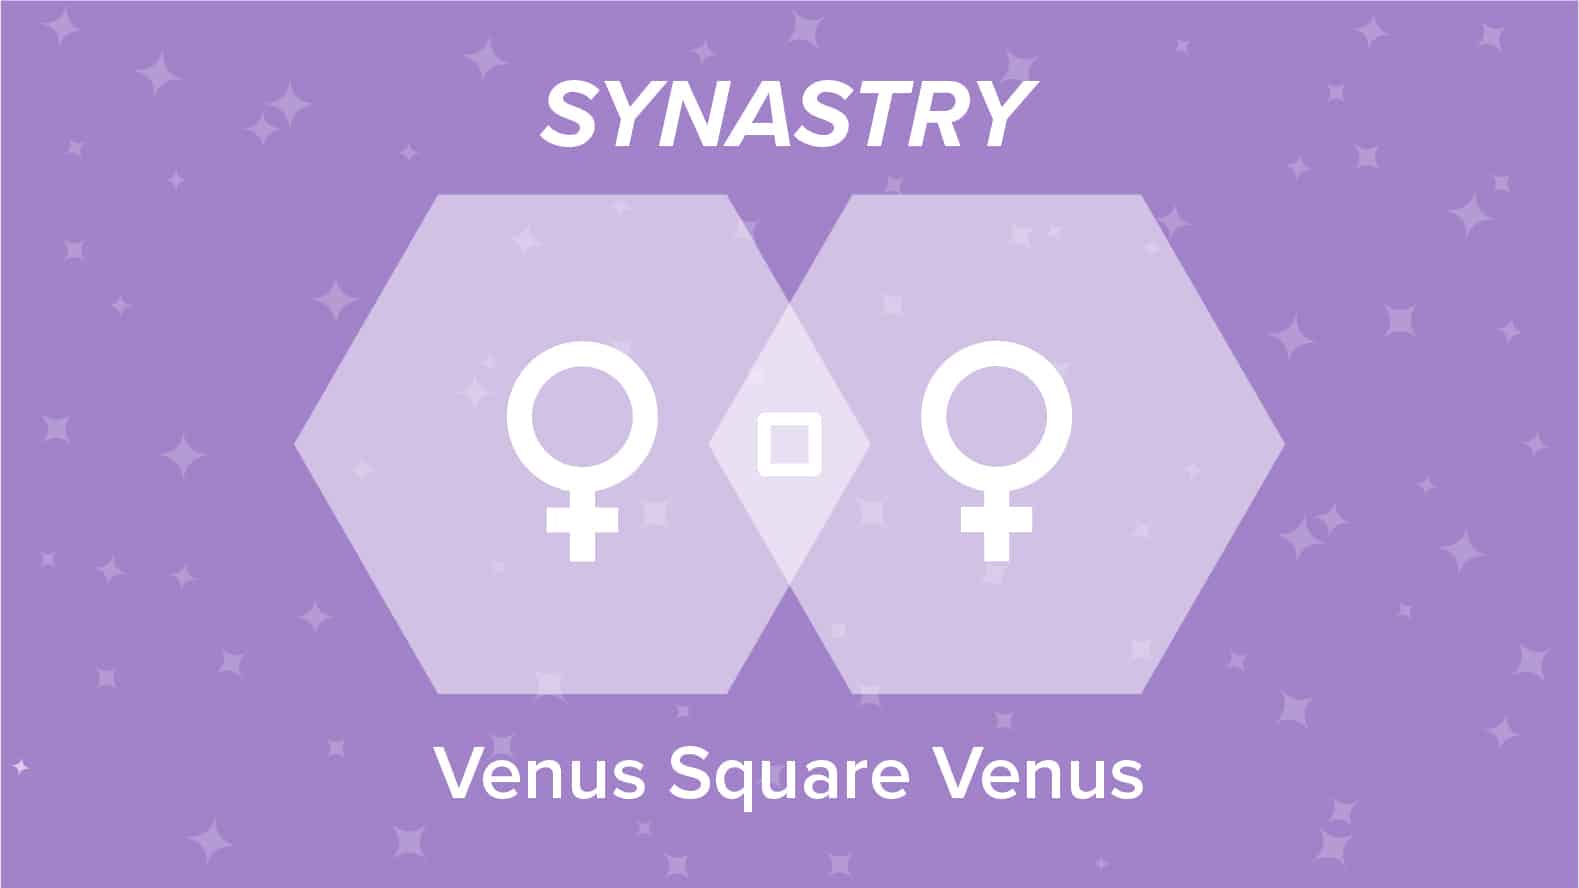 Venus Square Venus Synastry